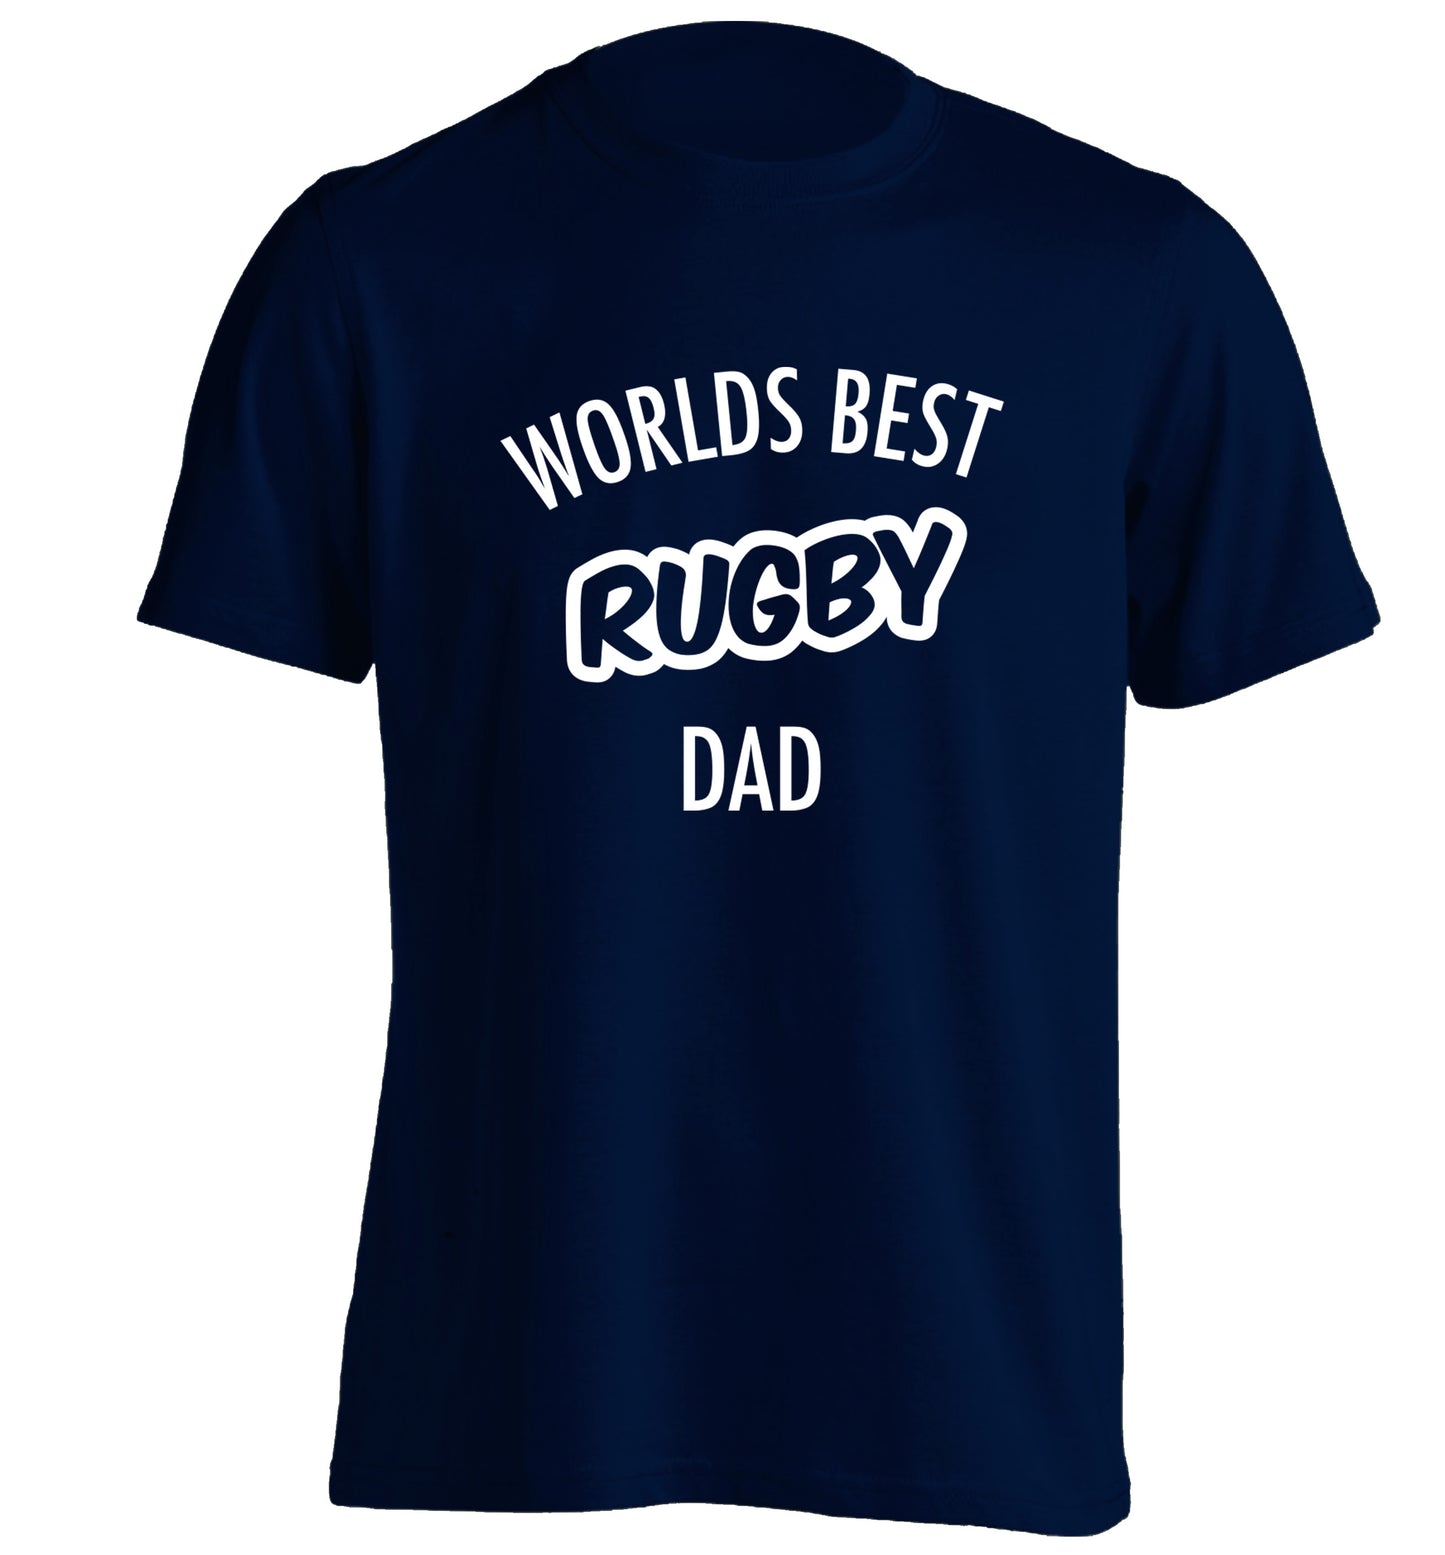 Worlds best rugby dad adults unisex navy Tshirt 2XL